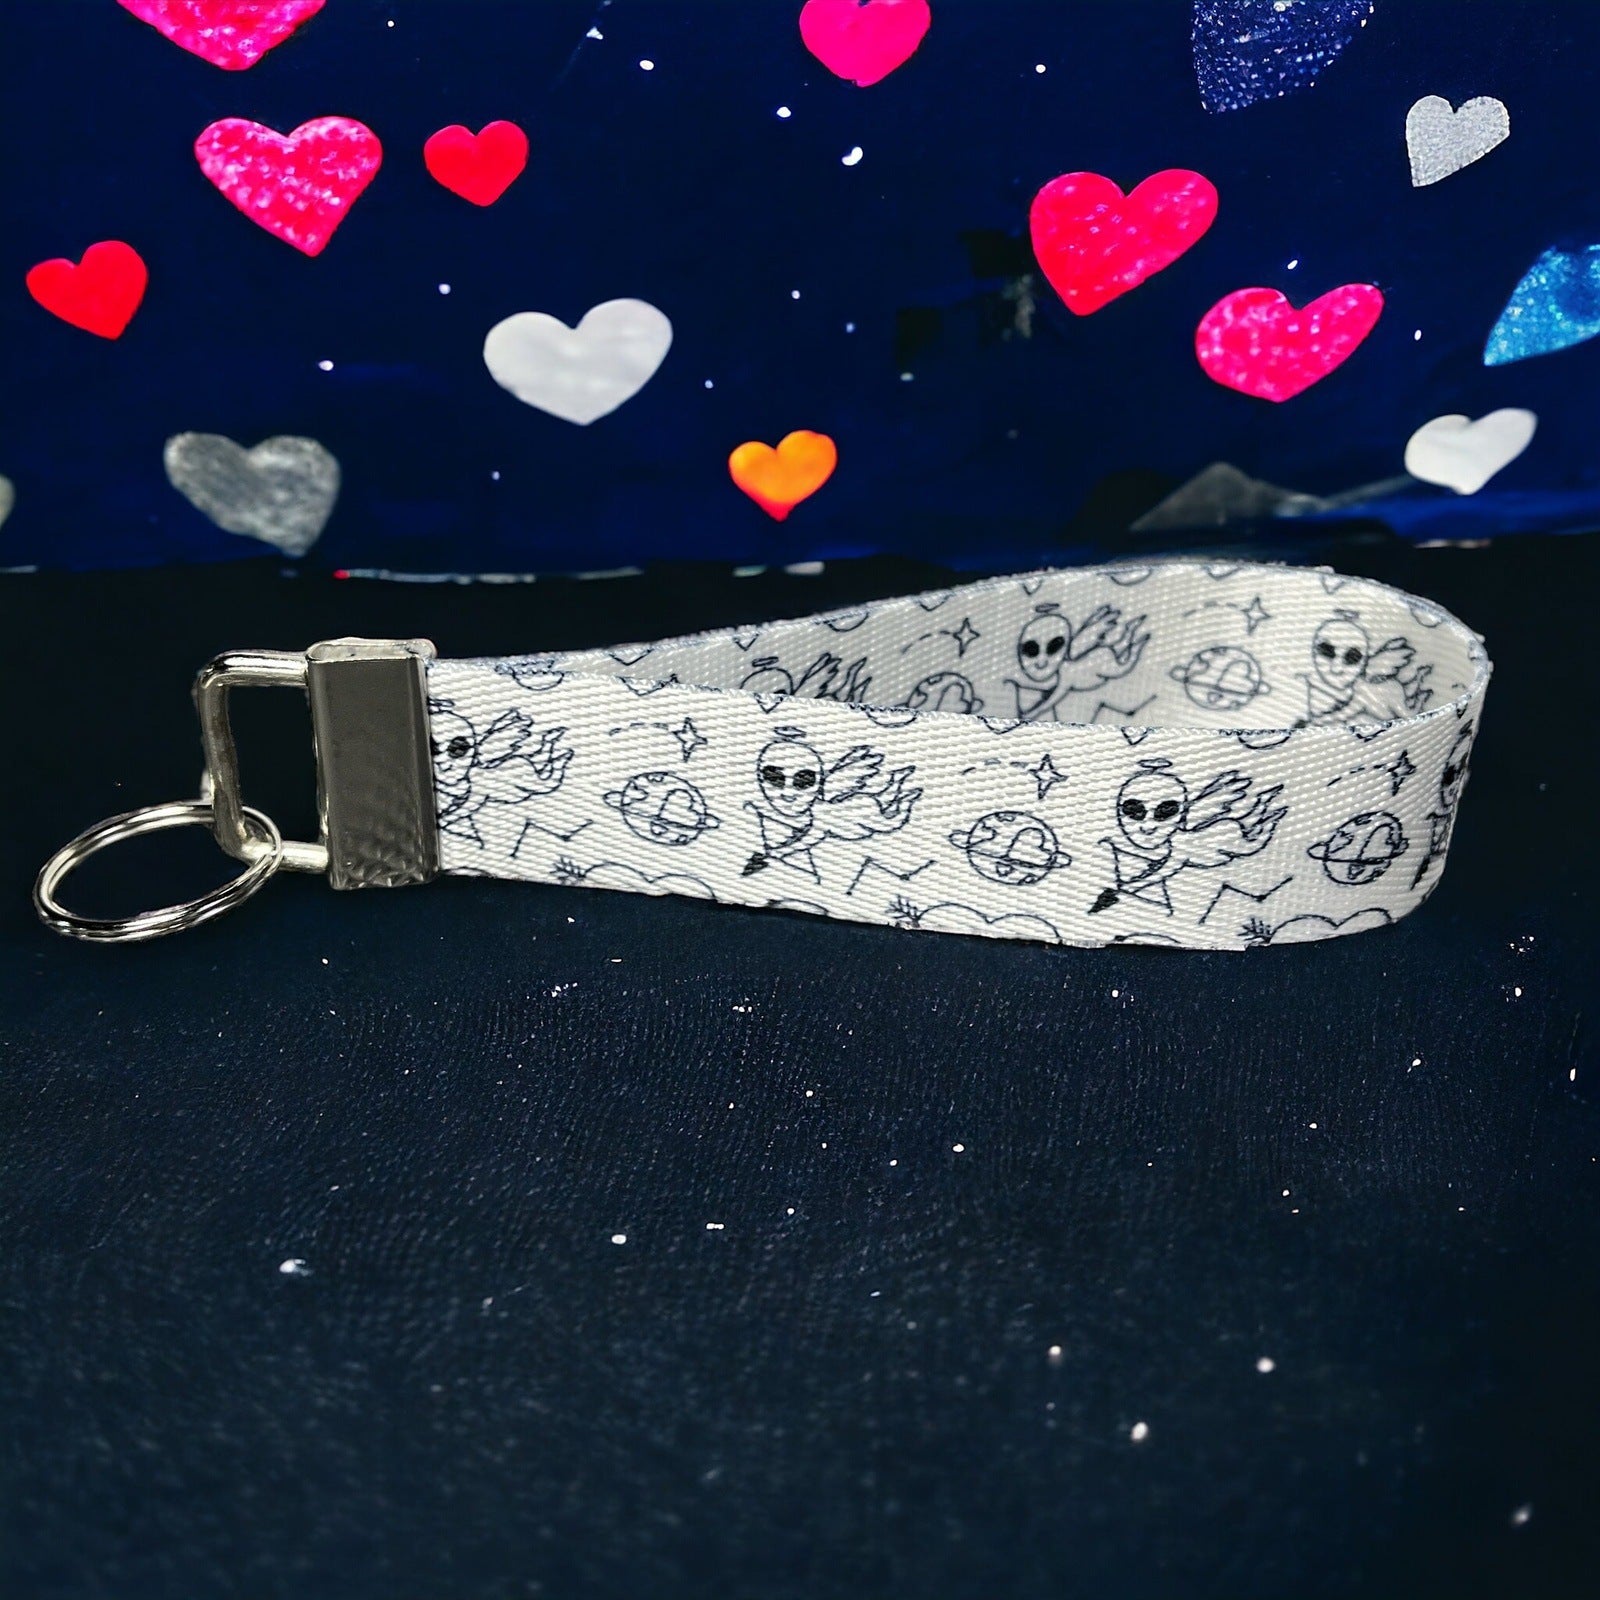 Love Doodles Valentine's Day Pattern Nylon Key Fob - Fabric Wristlet Keychain